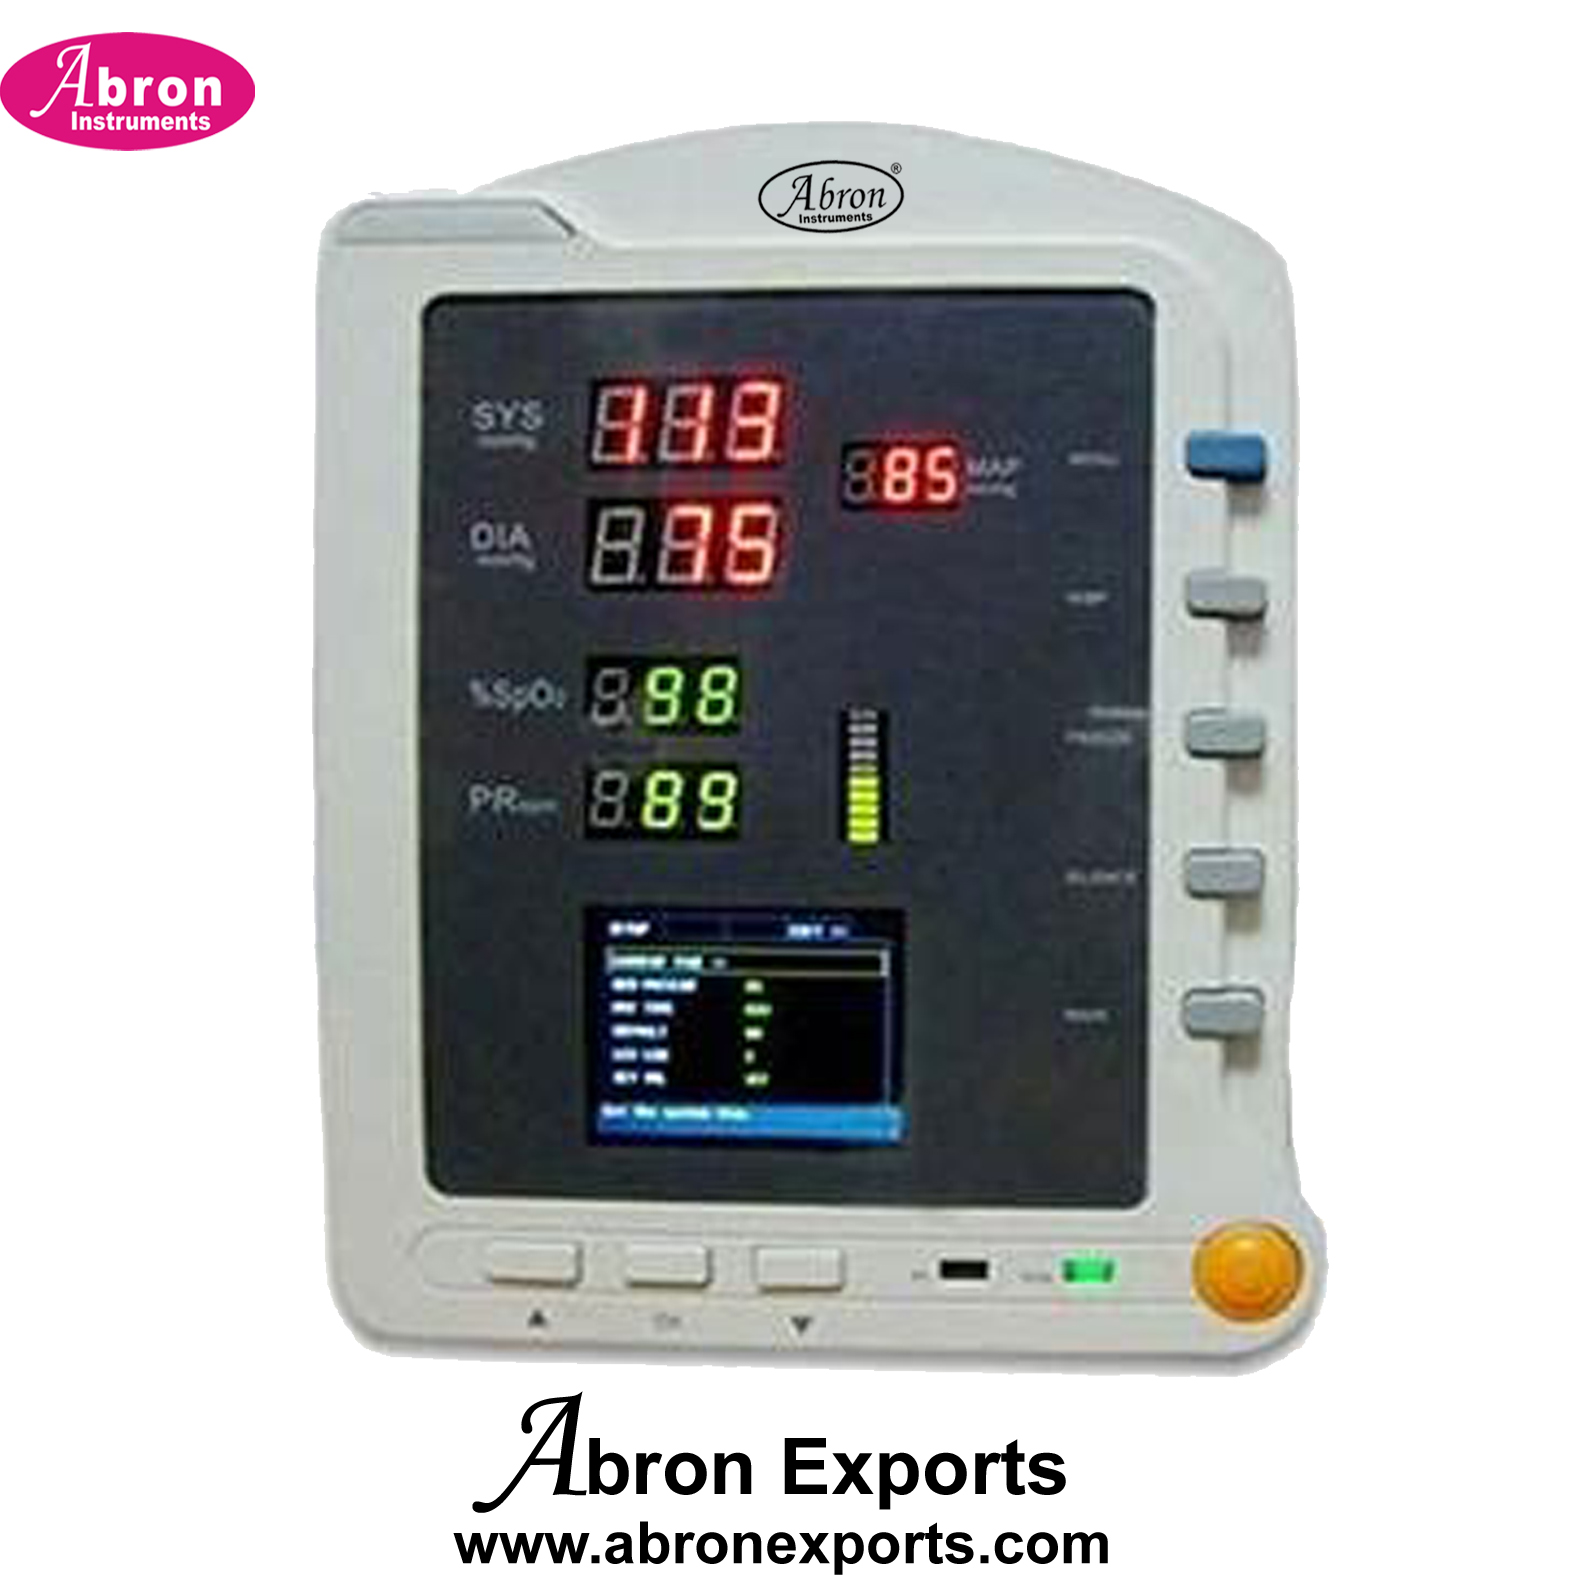 Patient Monitor Recording Pulse BP SPO2 Heart Rate Ambulatory Blood Pressure 24 Hour Parameters Data Recording ABM-2552PT 